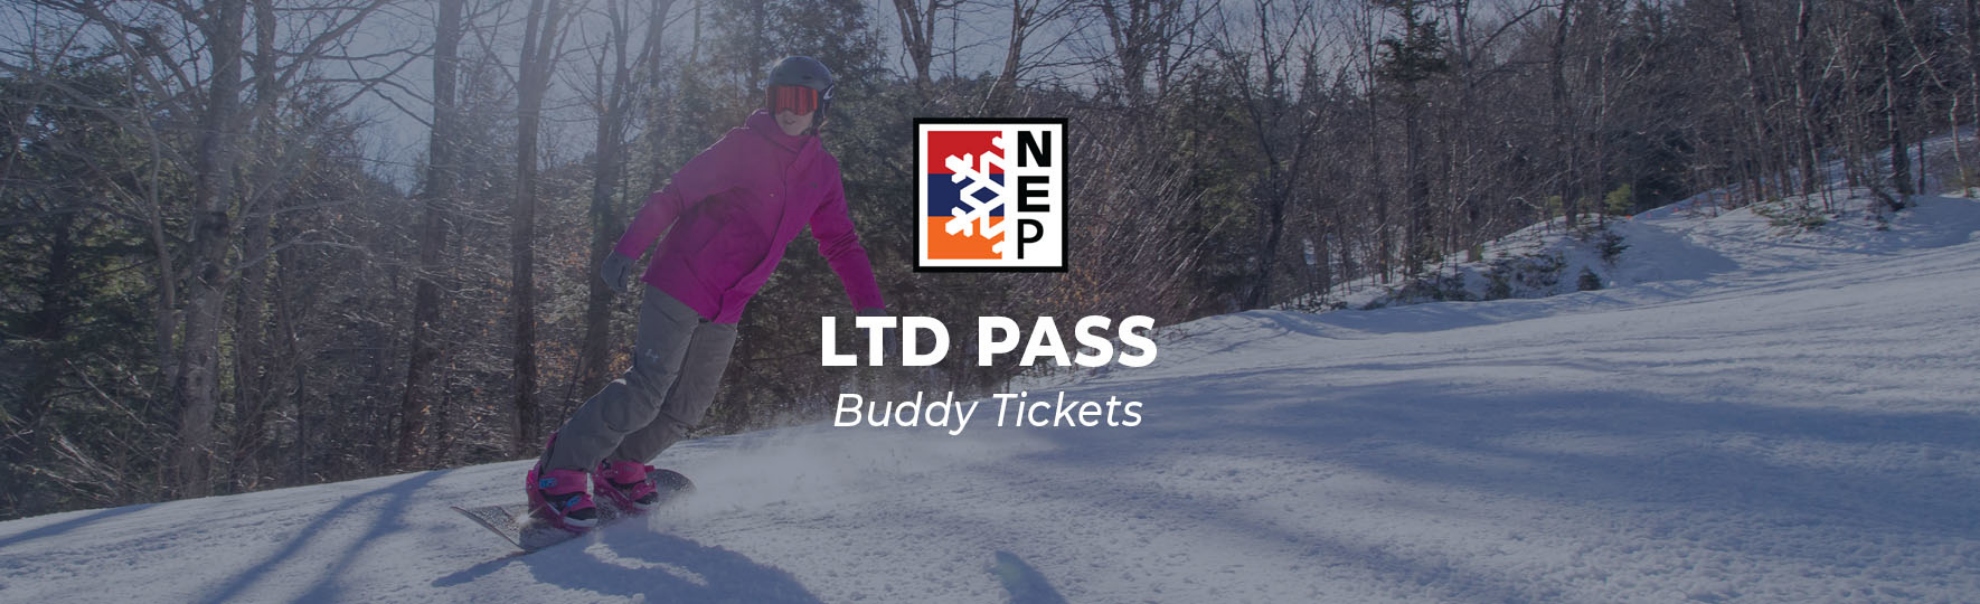 LTD Pass Buddy Tickets